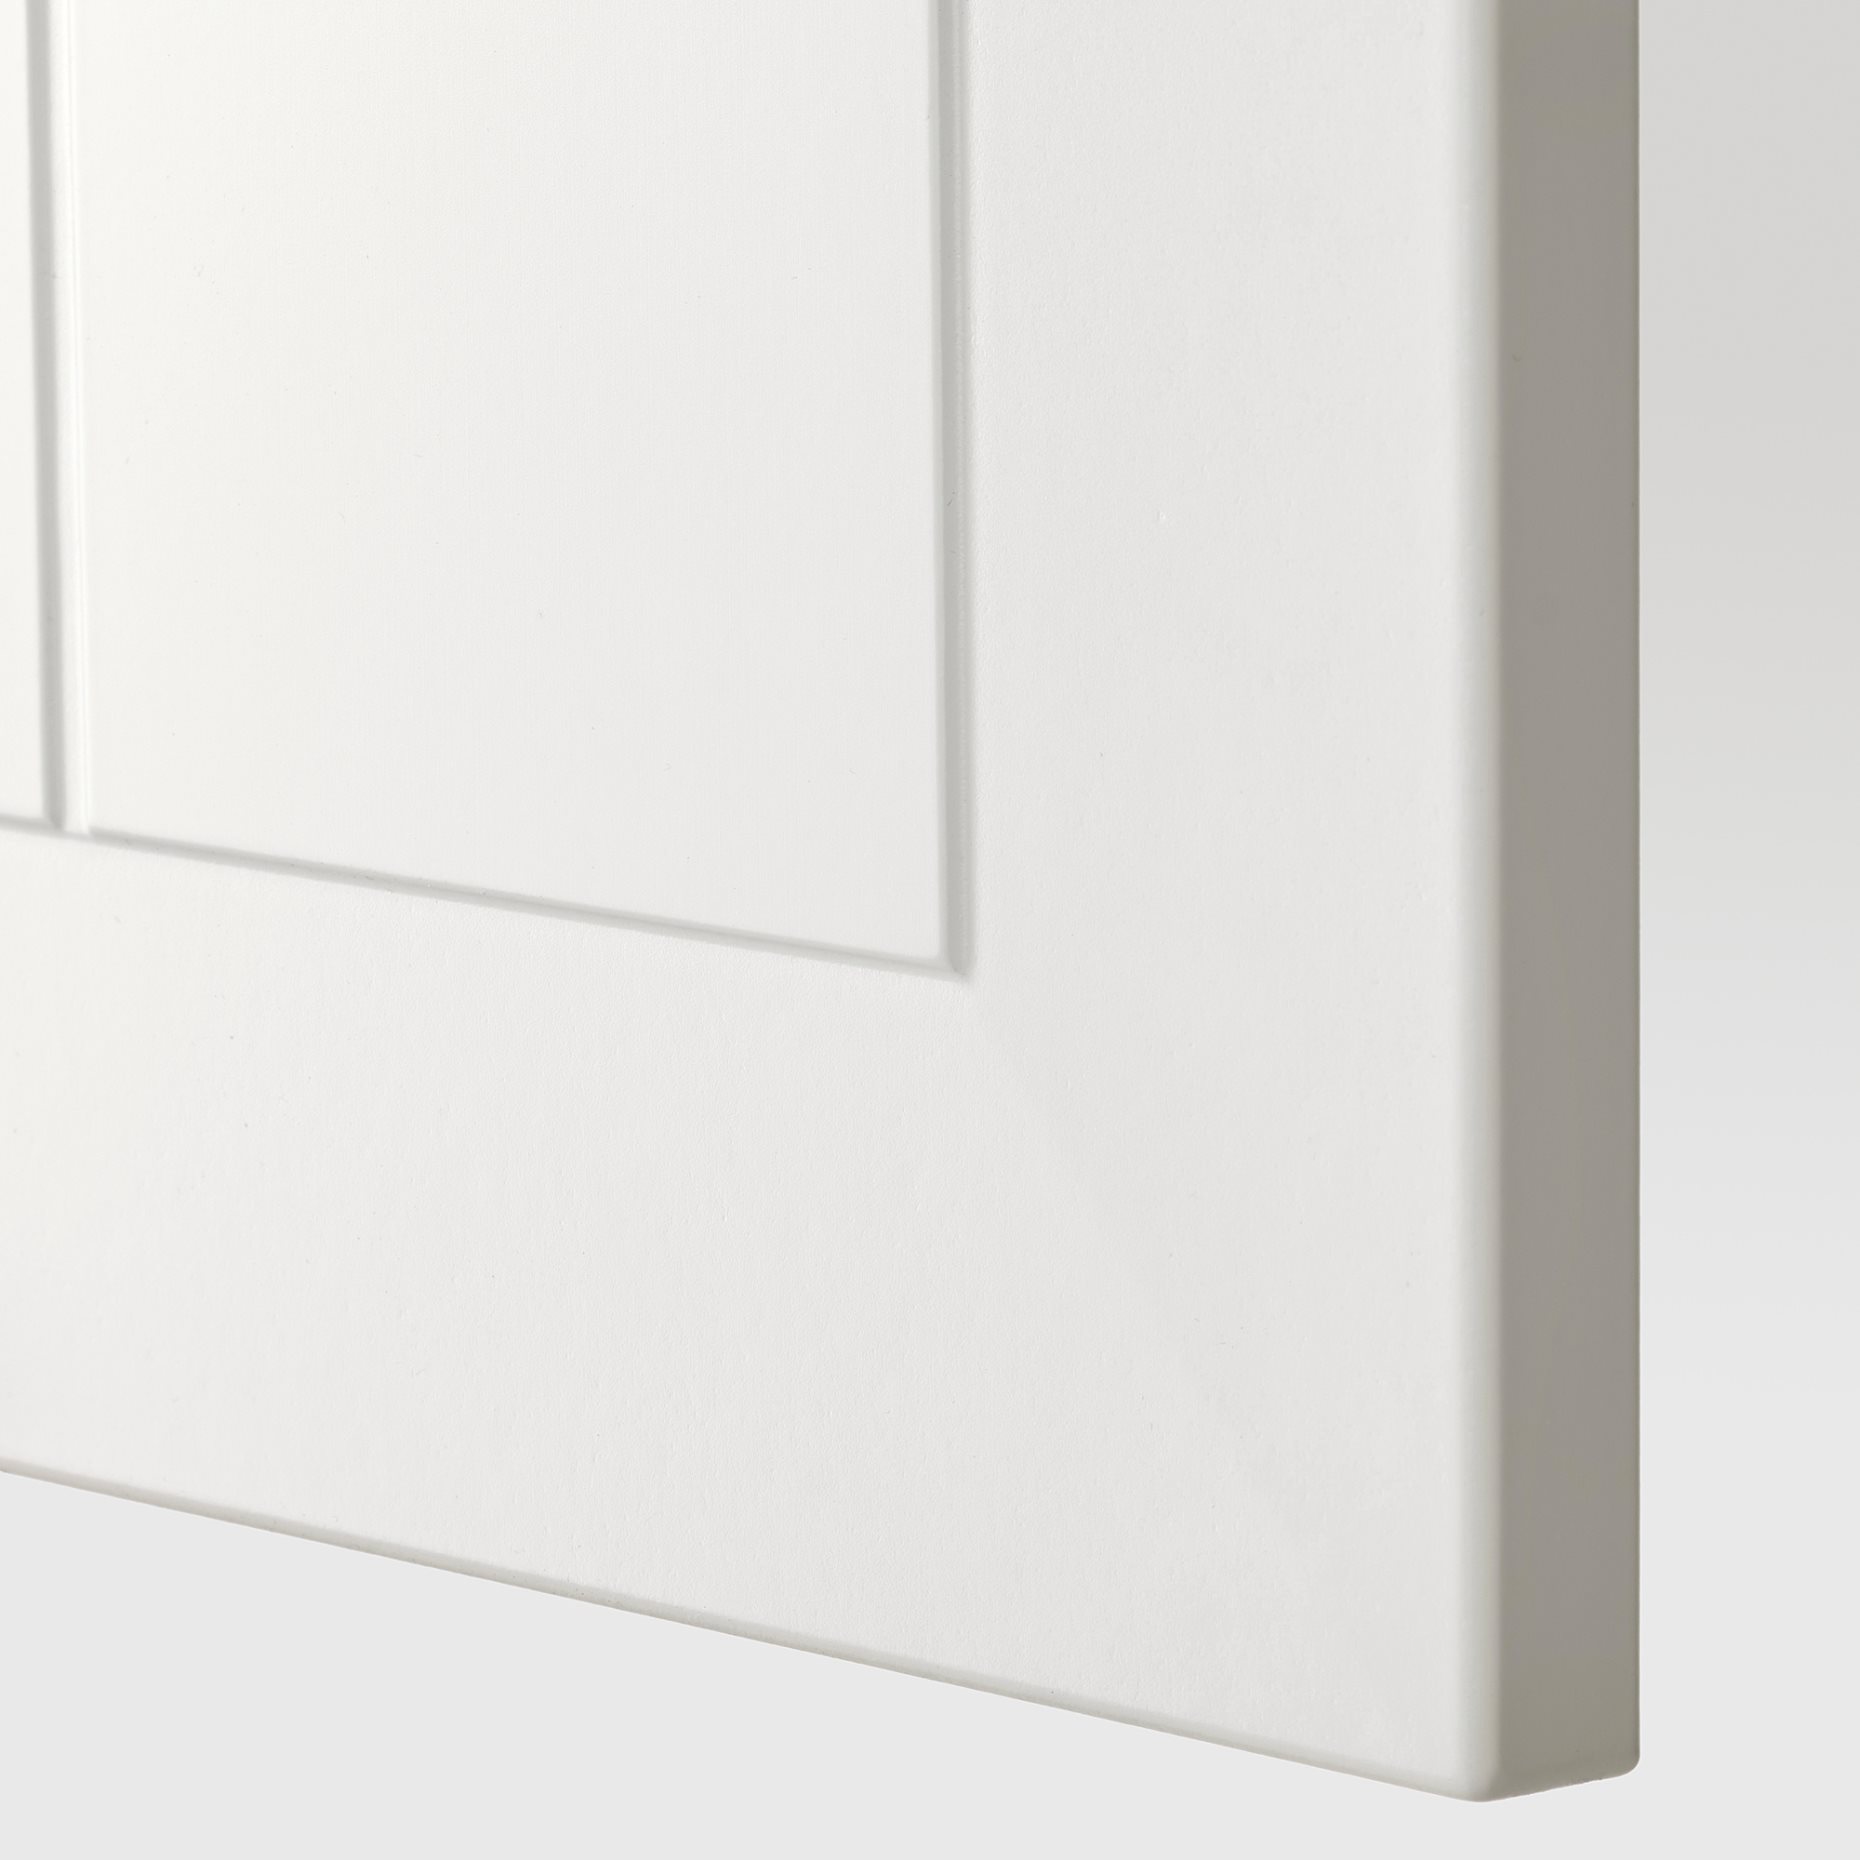 METOD, ψηλό ντουλάπι για φούρνο μικροκυμάτων με 2 πόρτες/ράφια, 60x60x240 cm, 794.695.89